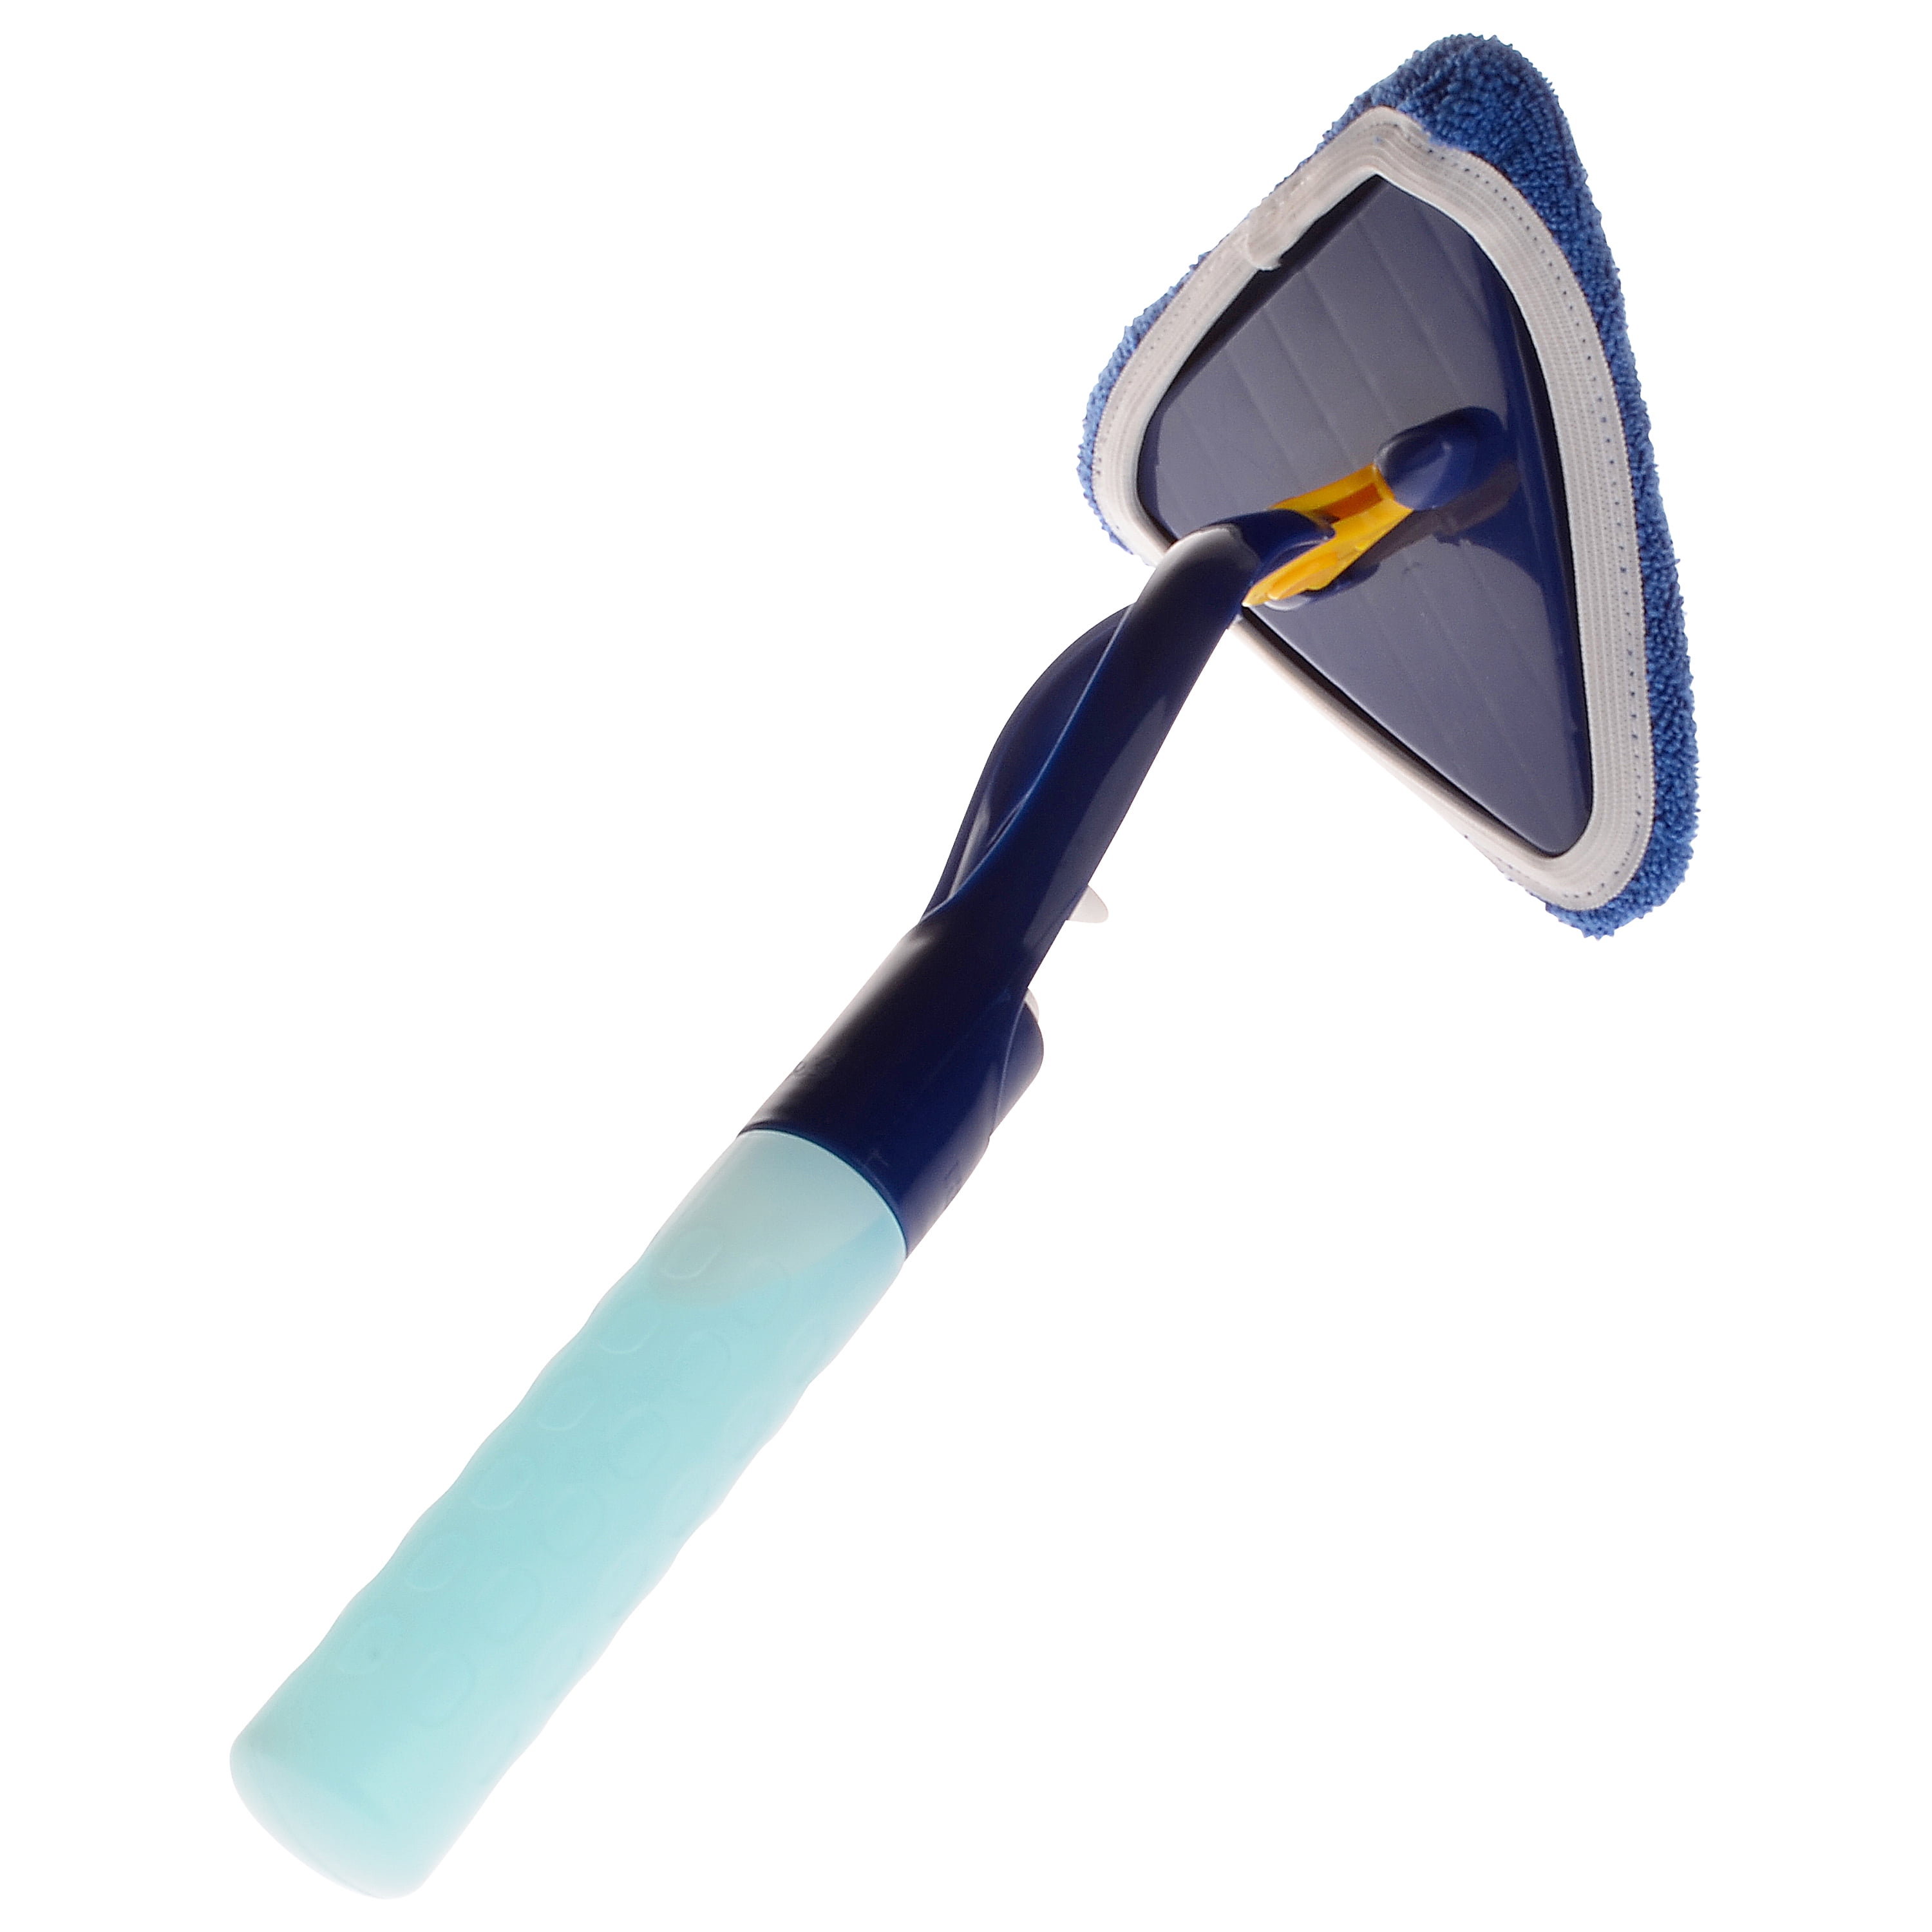 Rain-X Liquid-Filled Spray Squeegee for Glass & Window Cleaning, Blue, 1PK,  9425CDX - Walmart.com